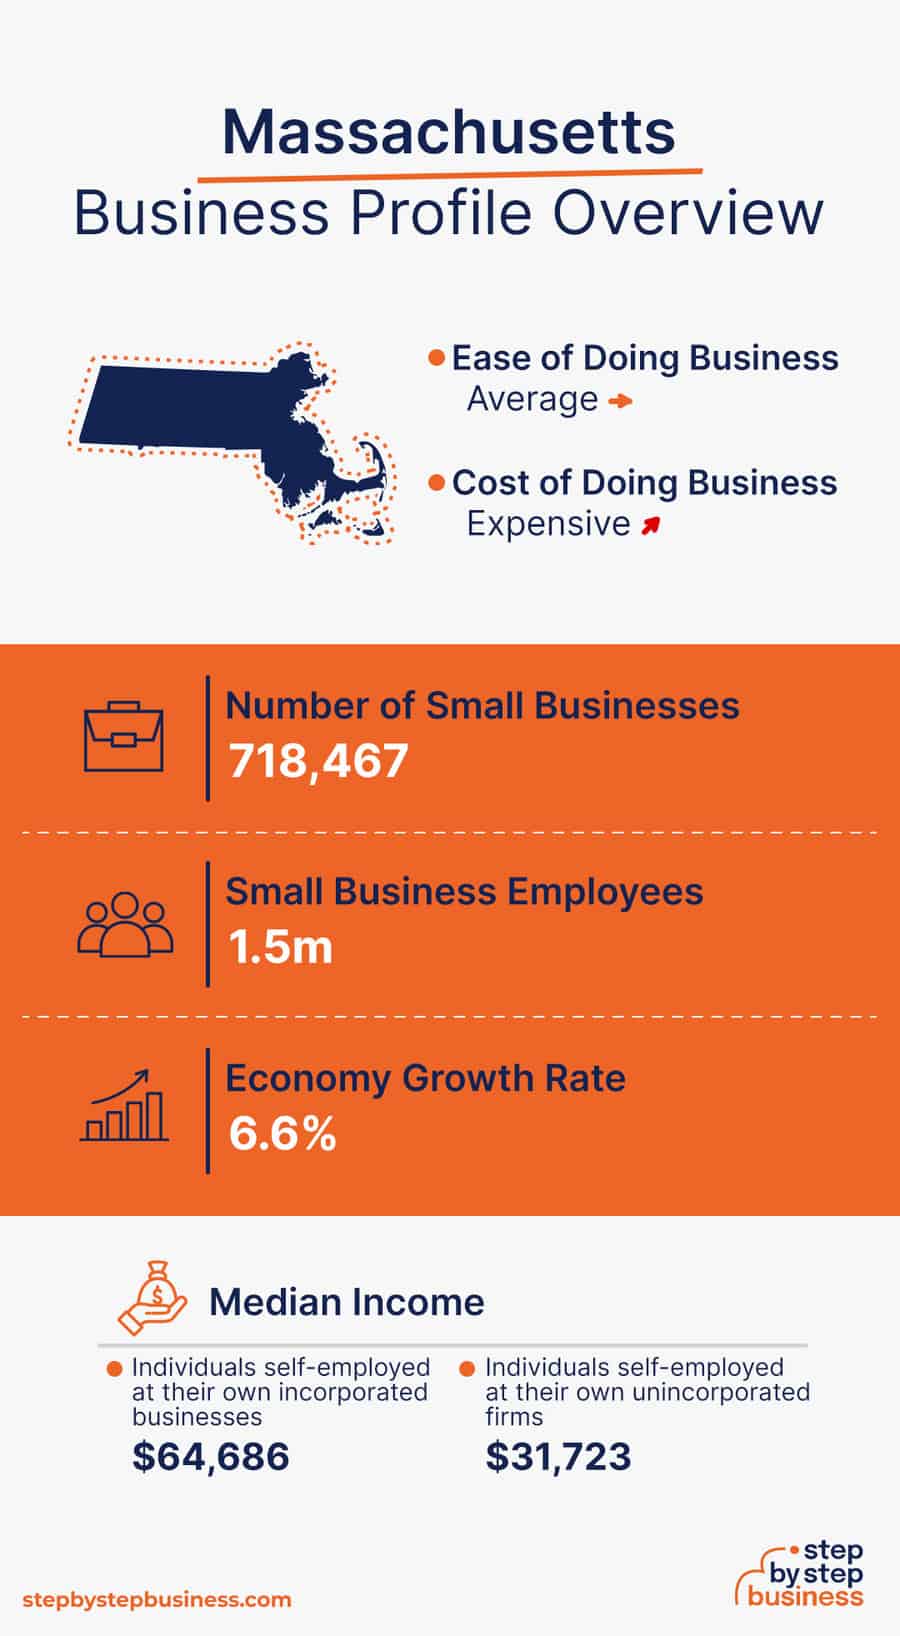 Massachusetts Business Profile Overview